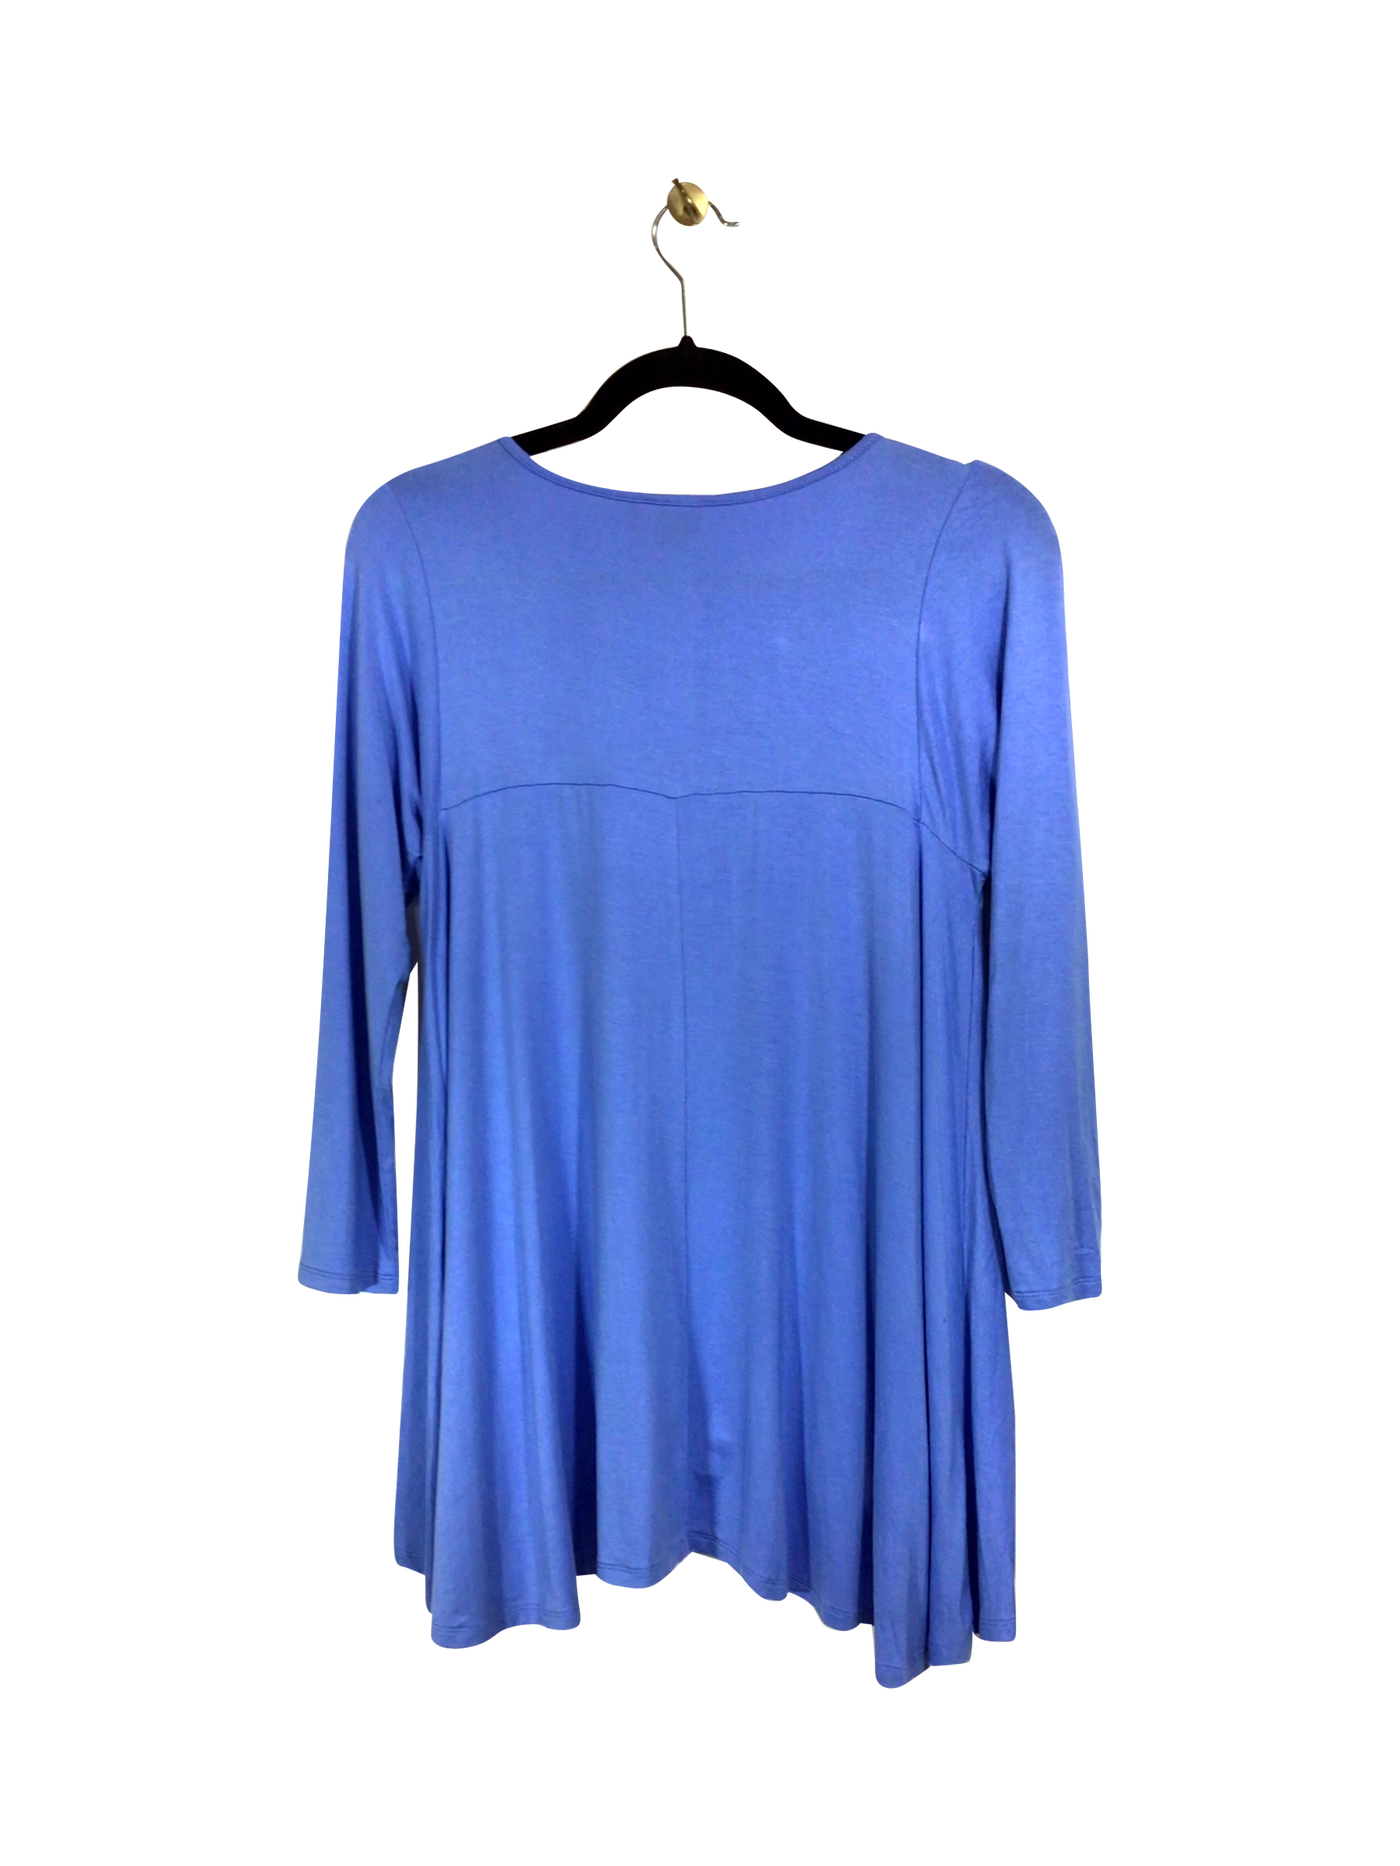 KAARI Regular fit T-shirt in Blue - Size XS | 15 $ KOOP